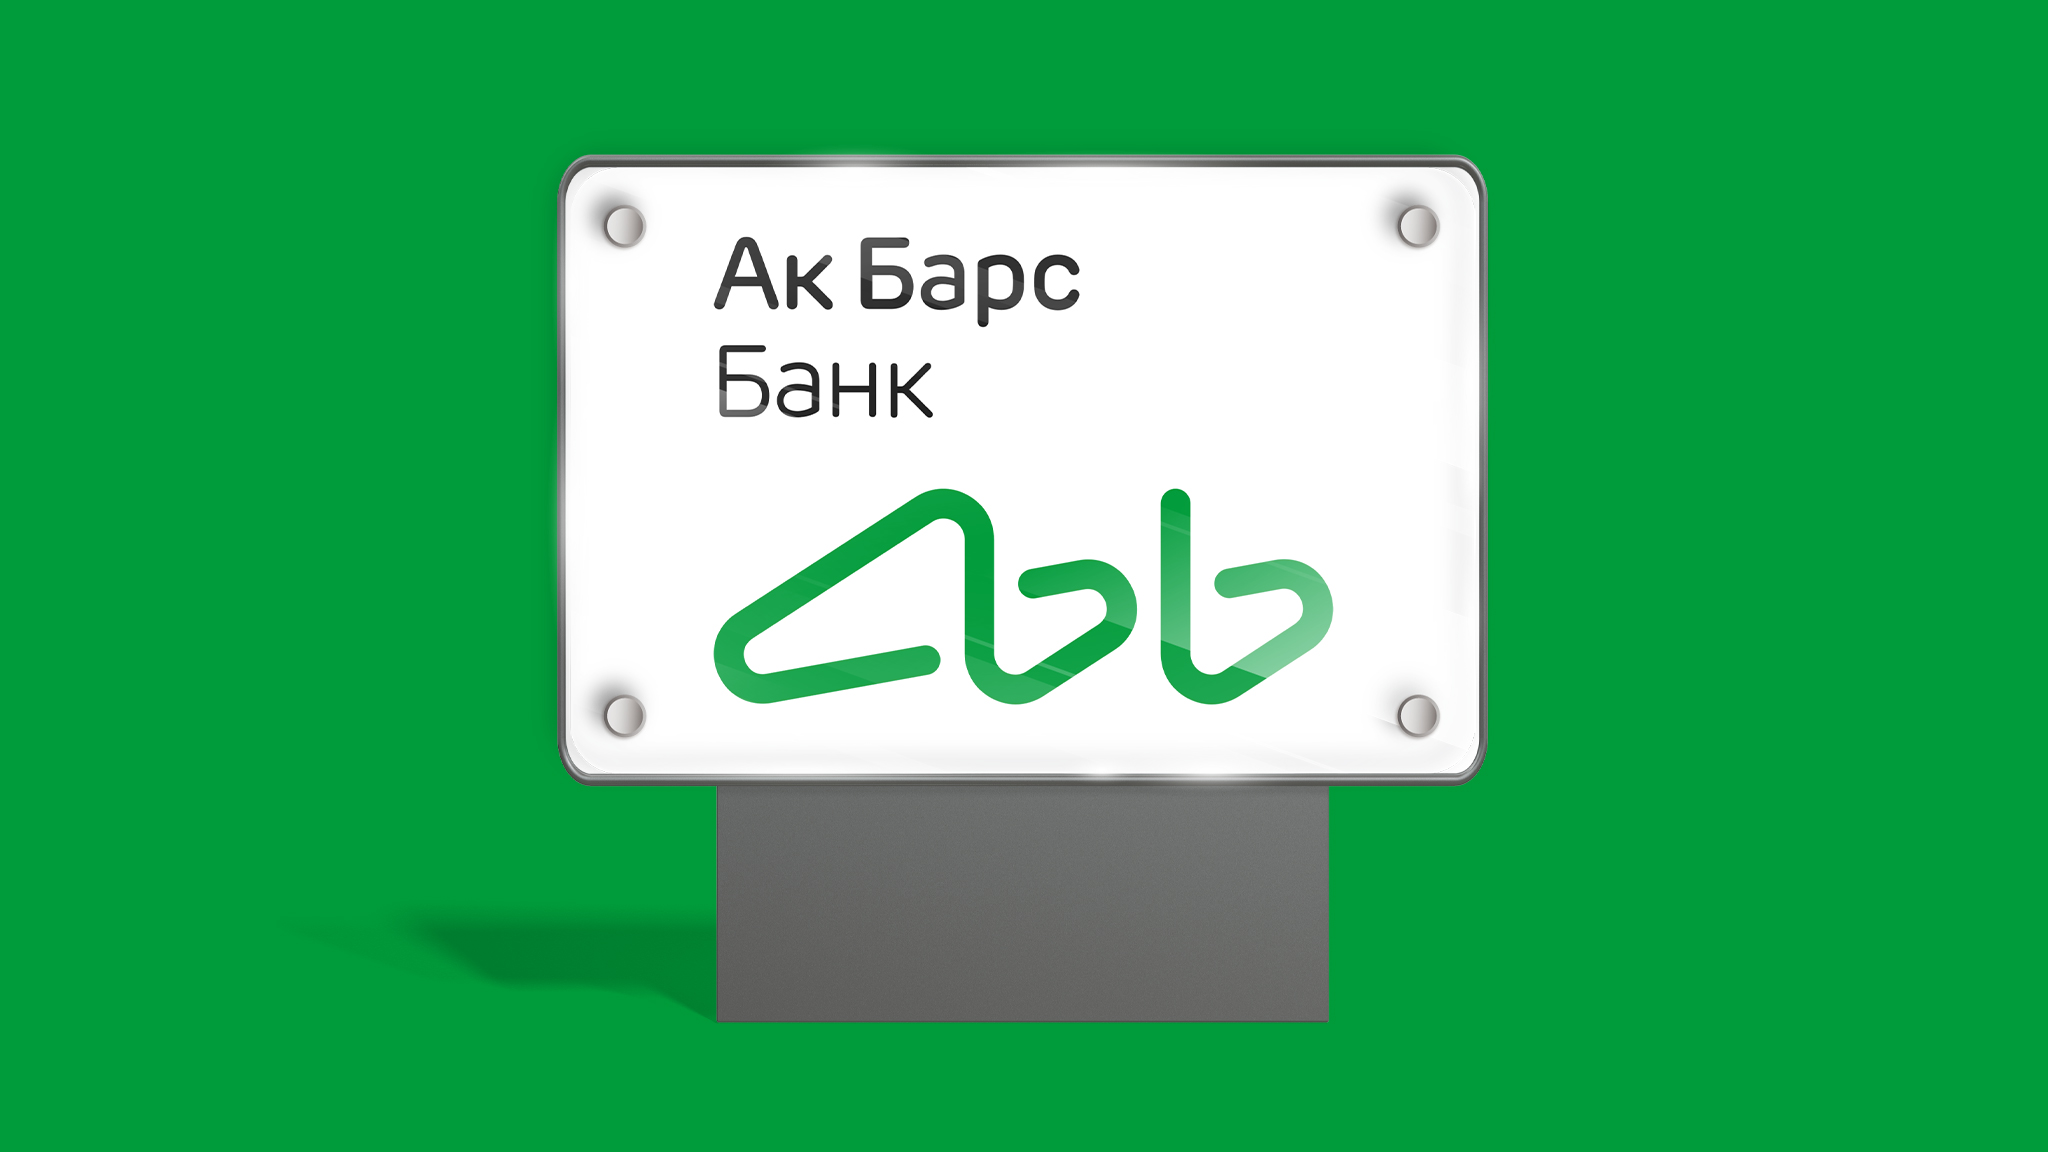 Ак барс банк новый. АК Барс банк. АК Барс банк на белом фоне. АК Барс банк Ставрополь. АК Барс банк логотип на белом фоне.